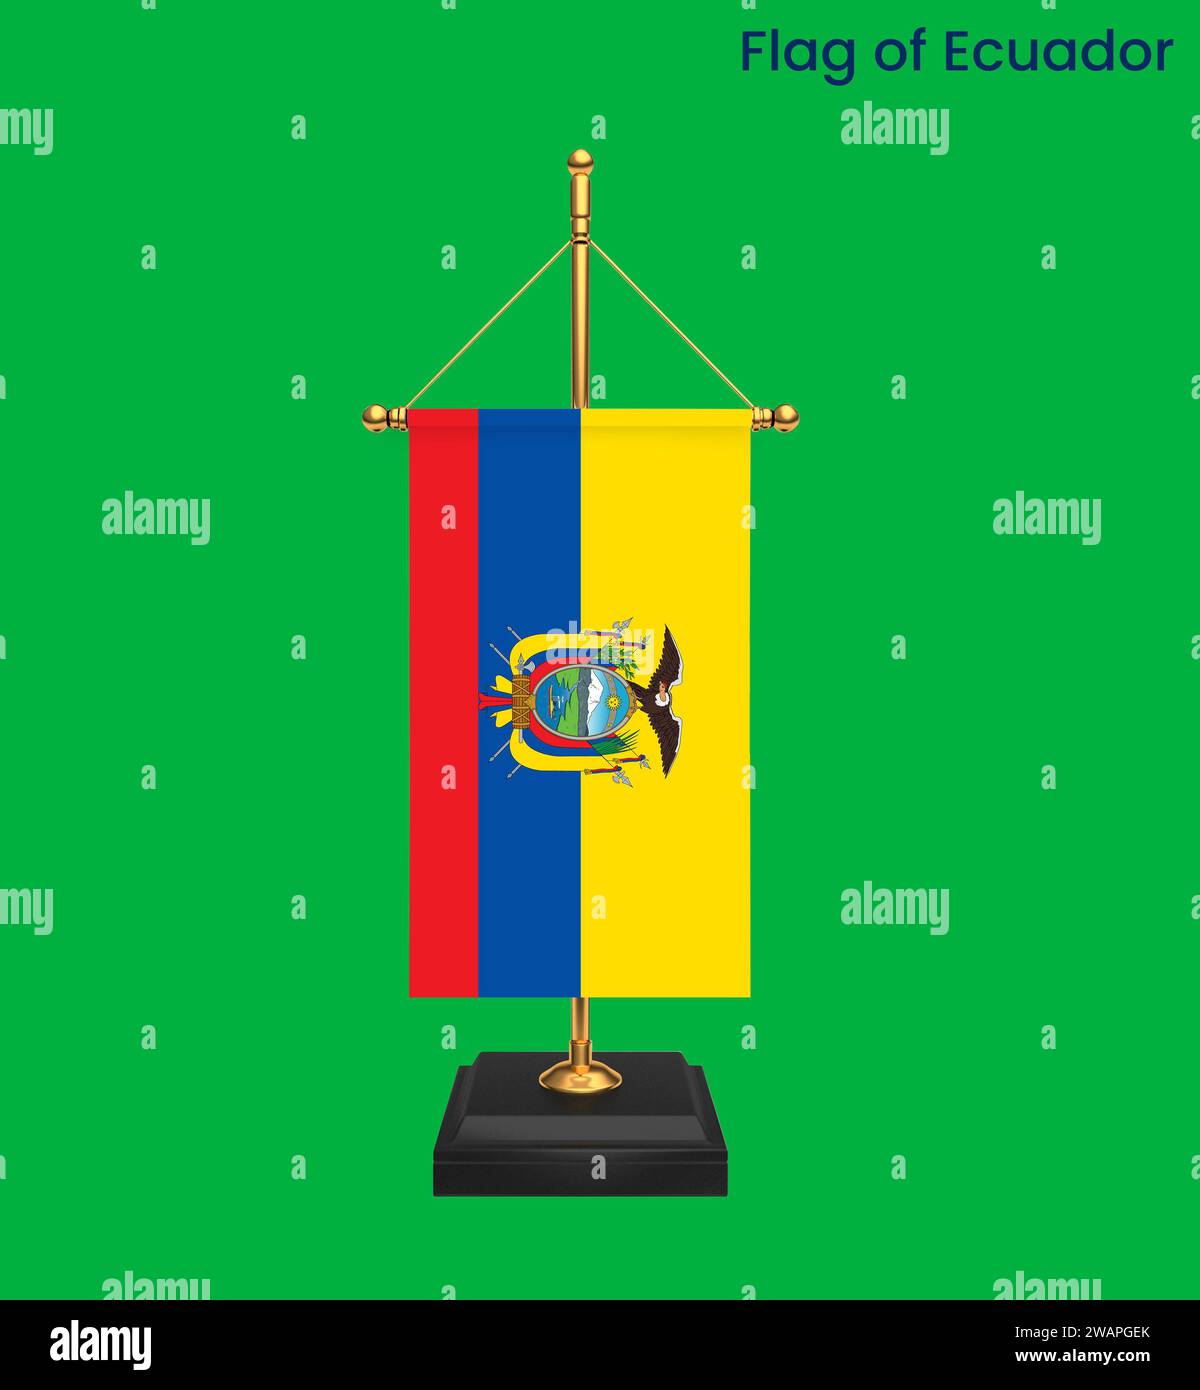 Hohe detaillierte Flagge von Ecuador. Nationale Flagge Ecuadors. Südamerika. 3D-Abbildung. Stockfoto